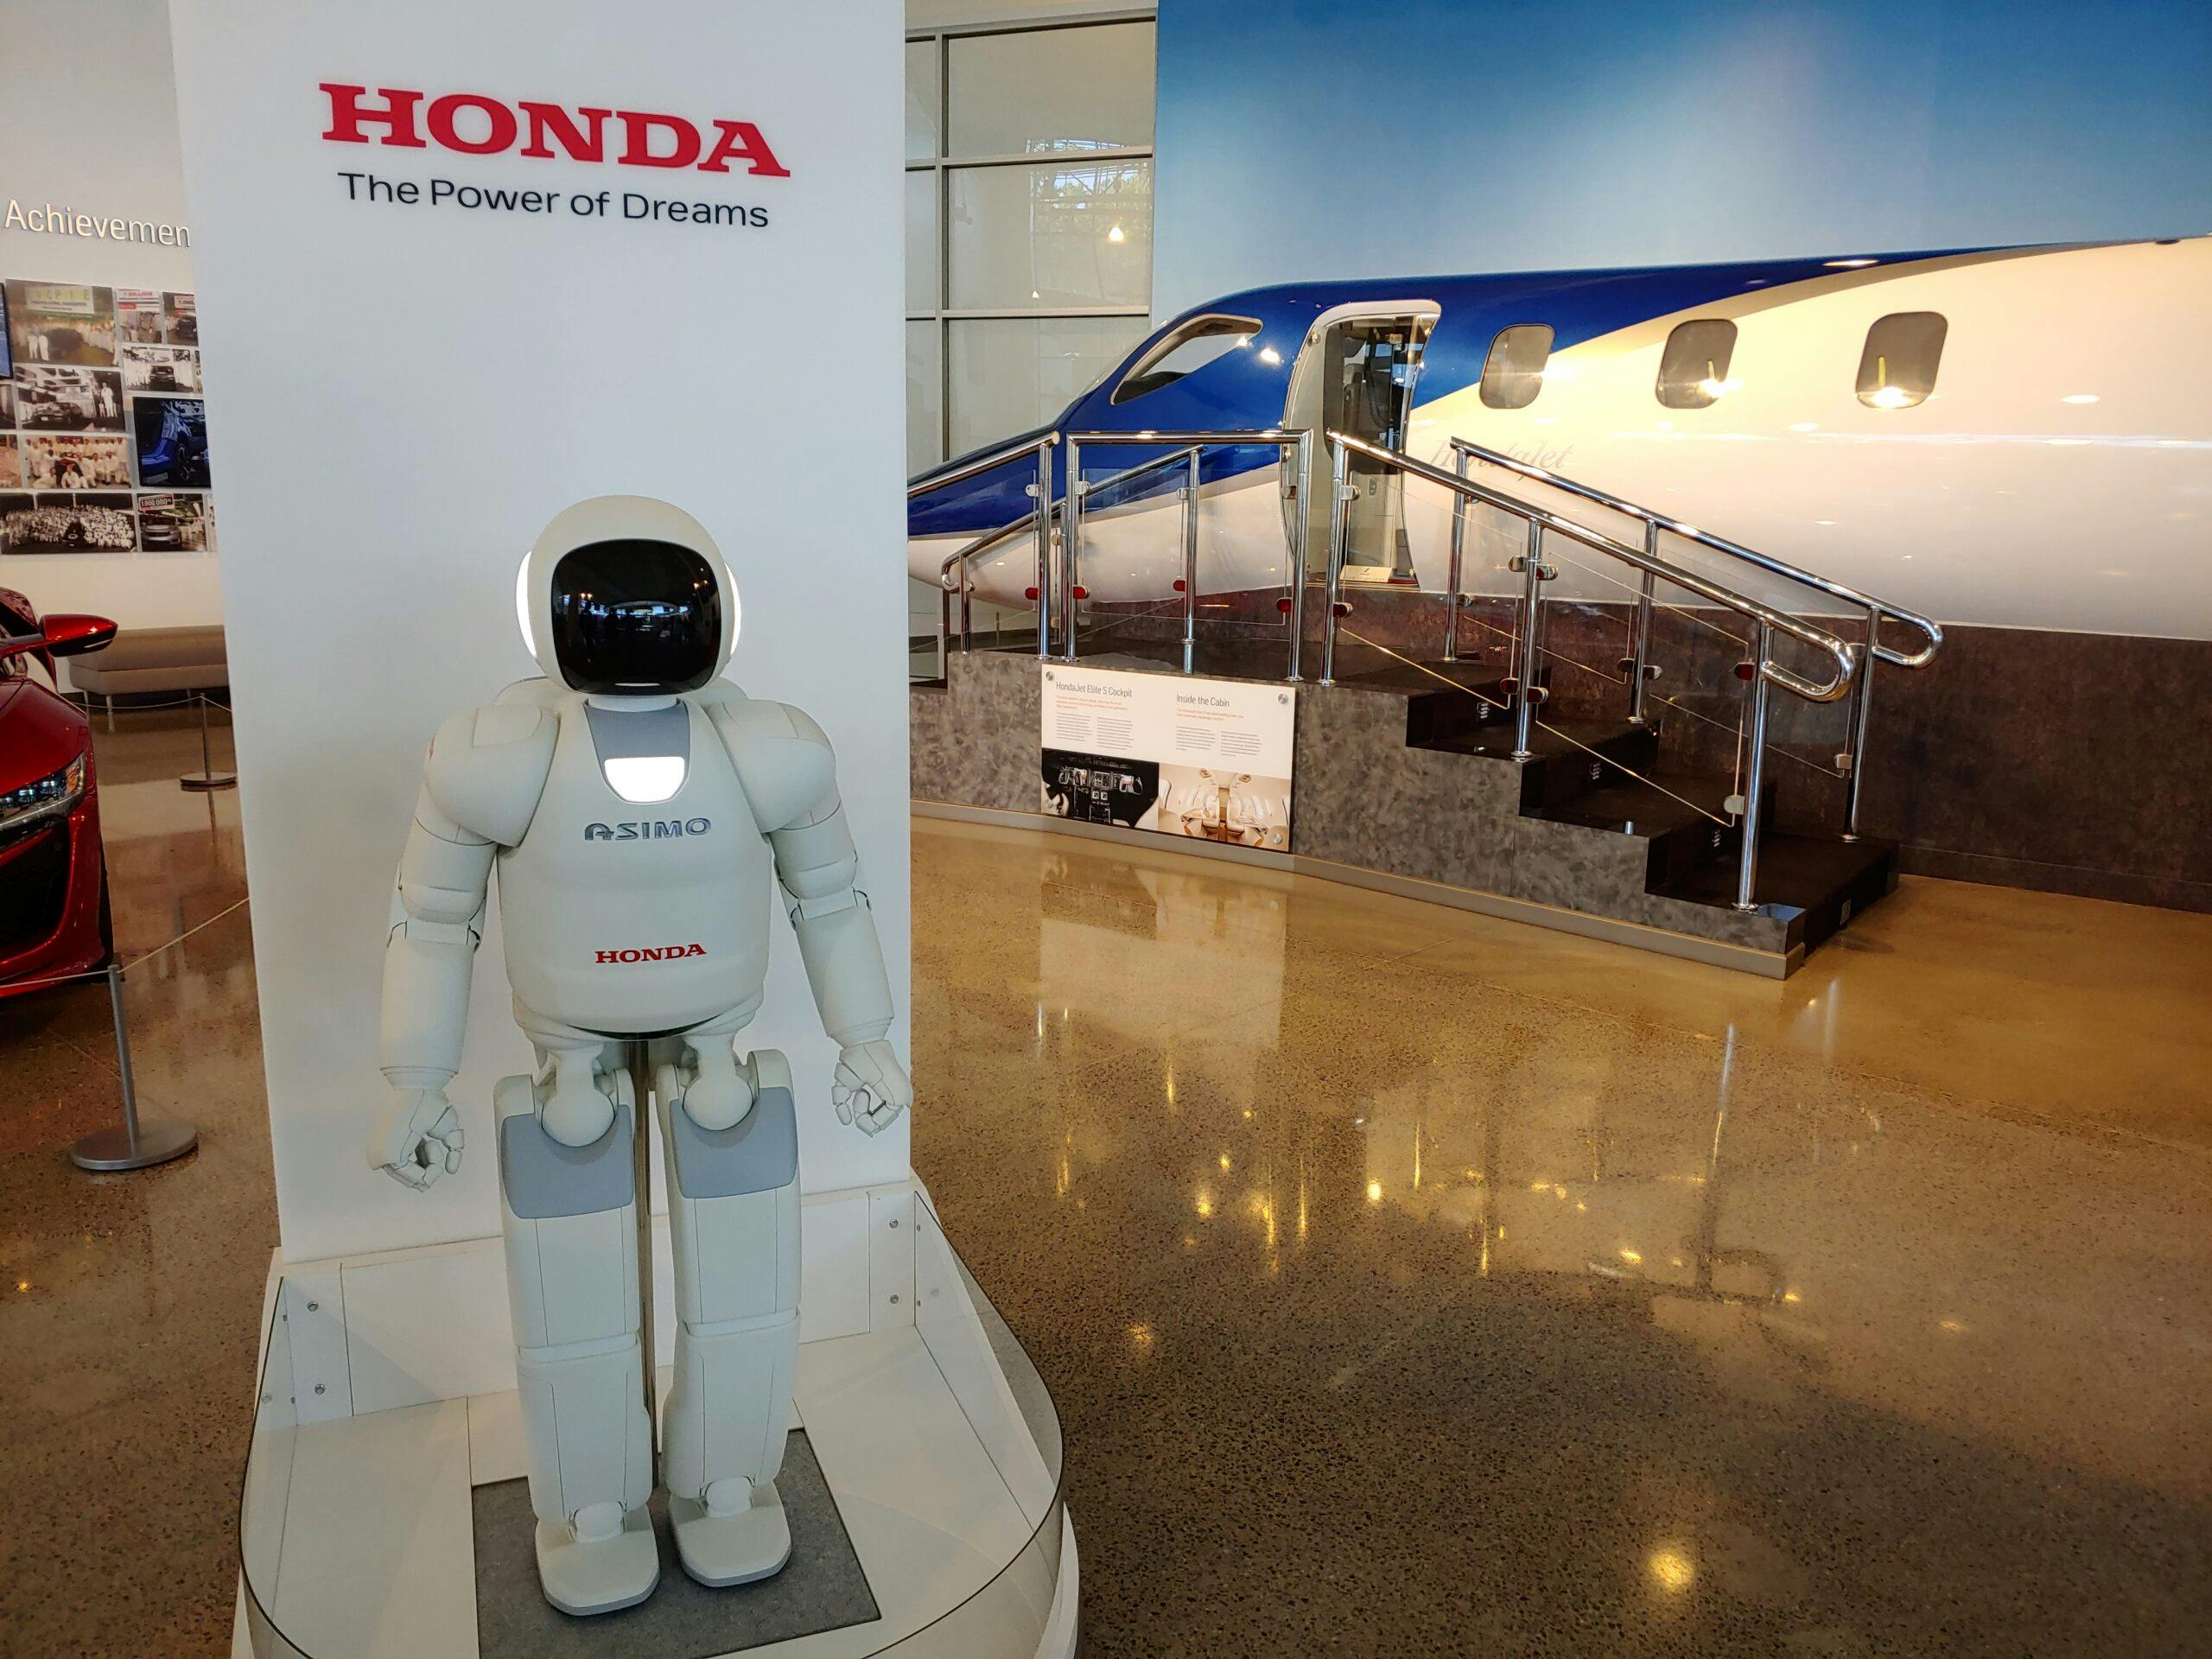 Honda Heritage Center robot asimo